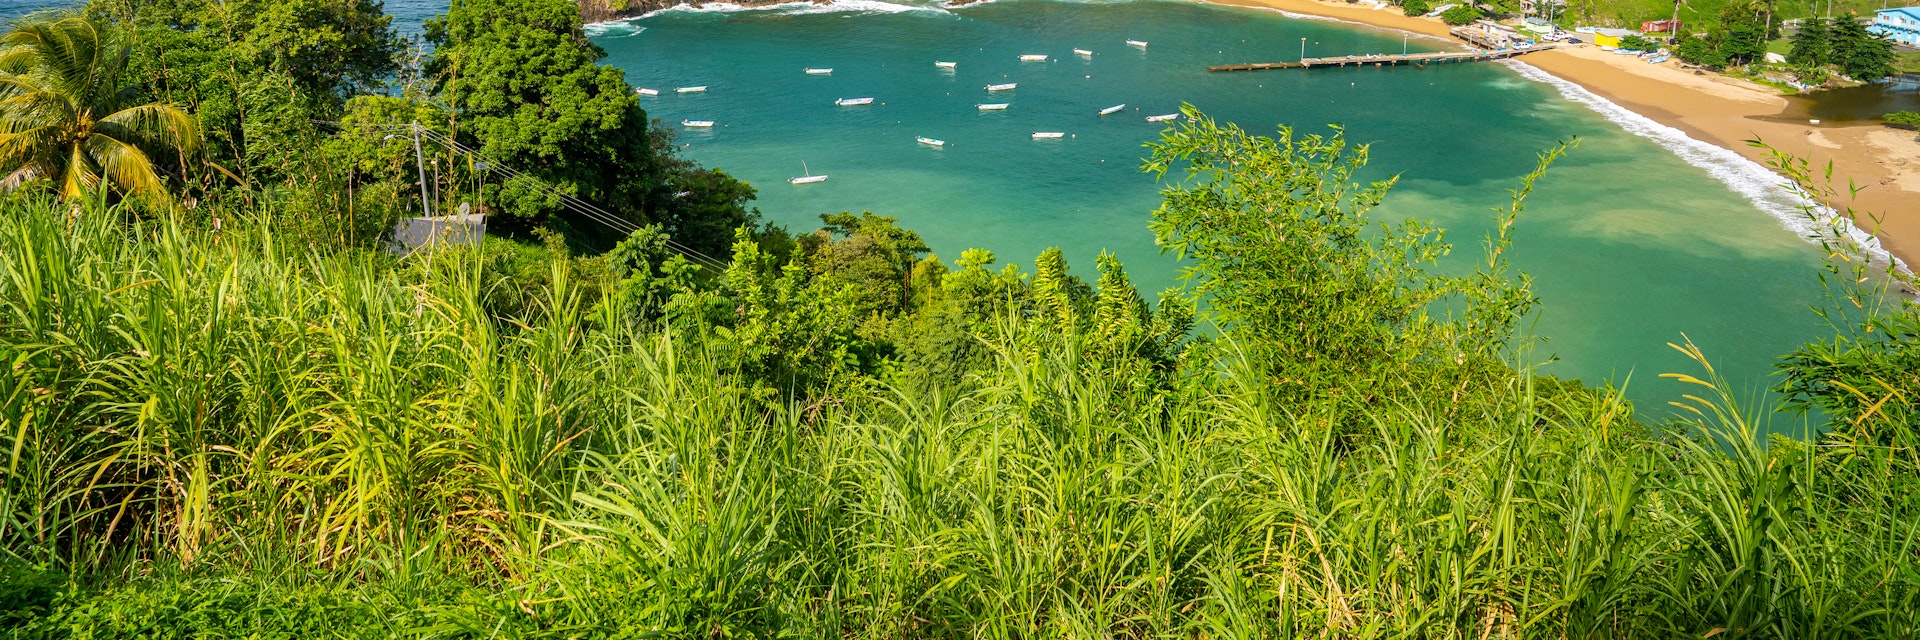 A landscape of the Parlatuvier bay in Trinidad and Tobago.